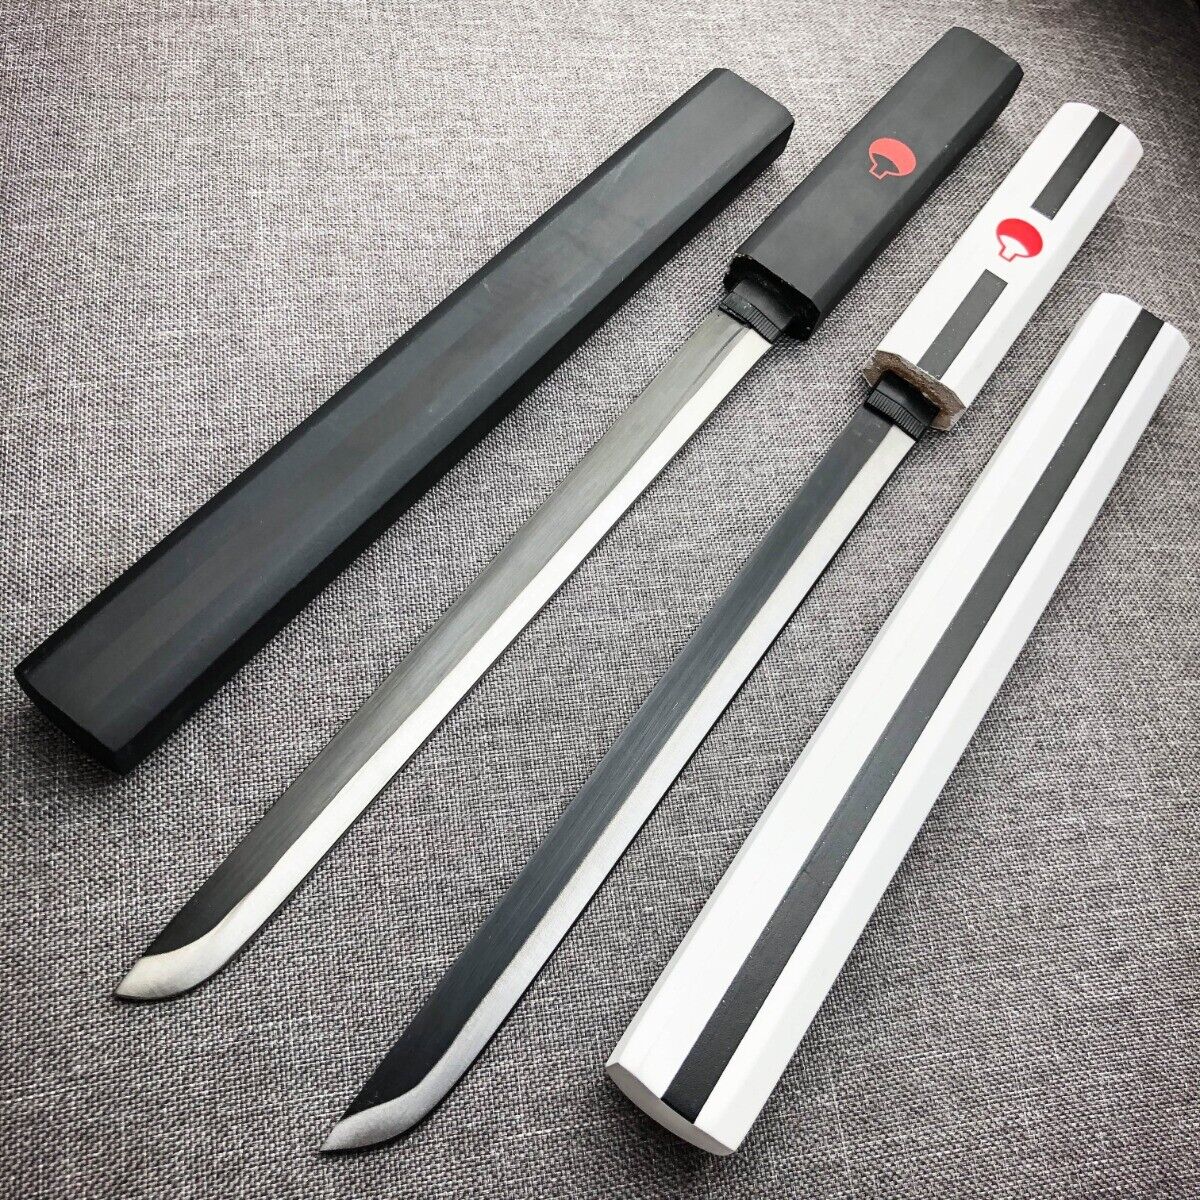 Ultimate Ninja Style Samurai Sword Katana Ninja Letter Opener Knife Fixed Blade